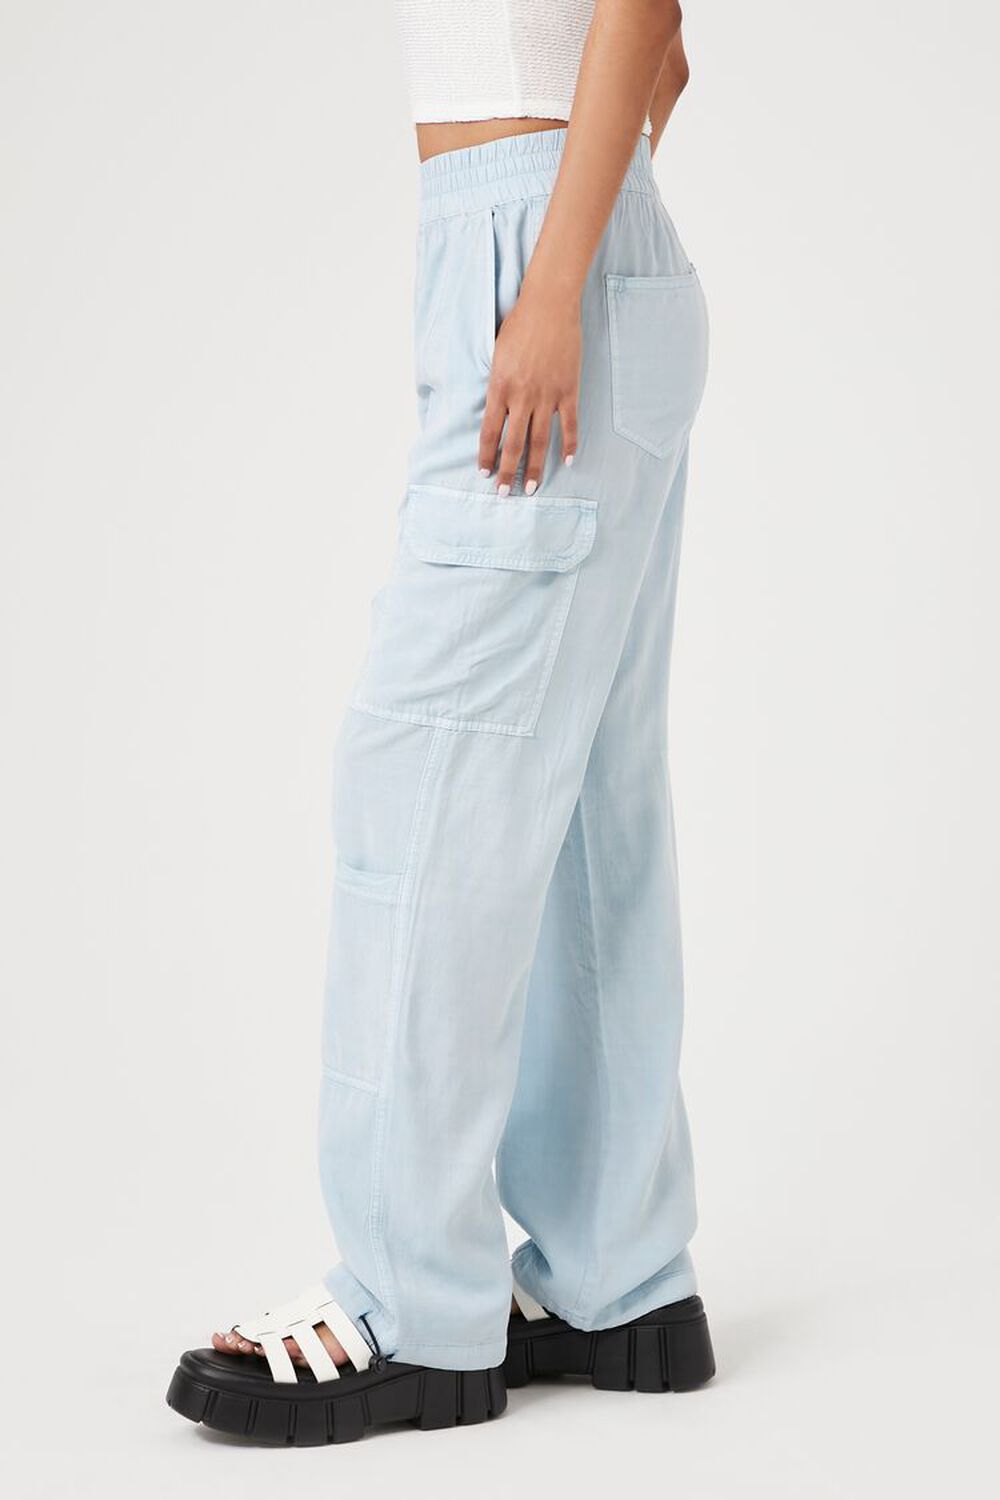 BLUE Baggy Cargo Pants, image 3